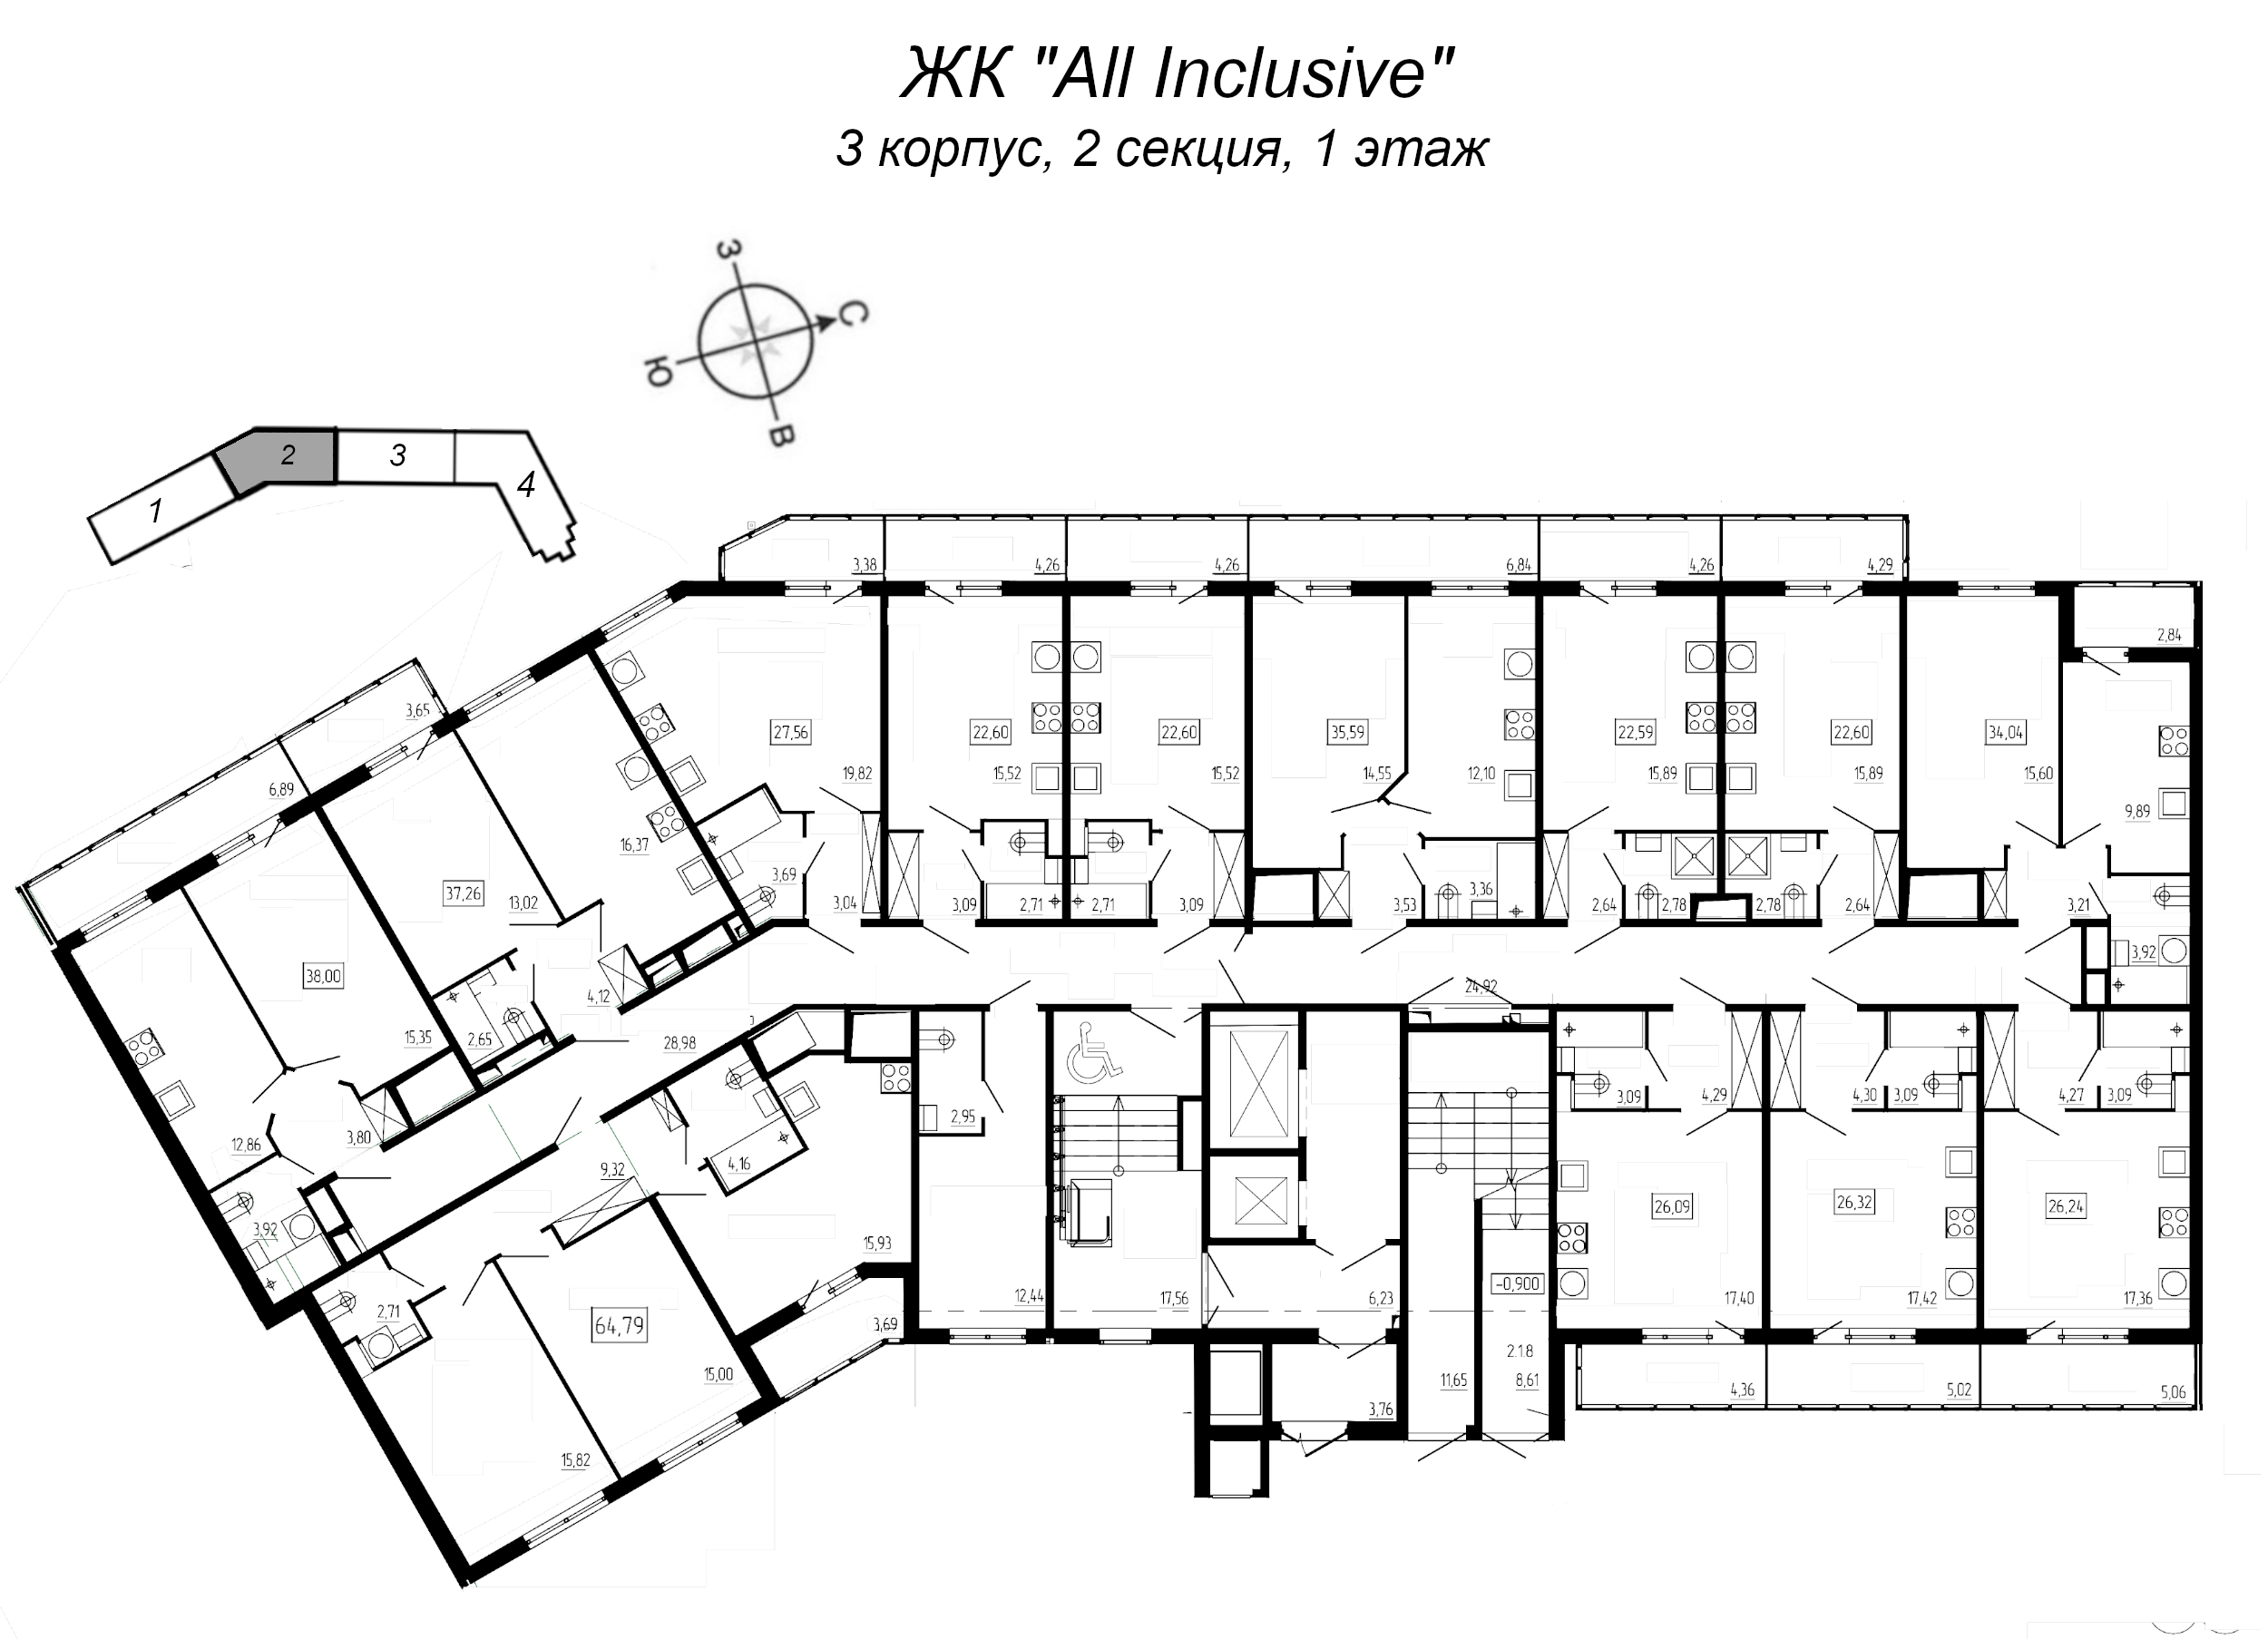 Квартира-студия, 26.09 м² в ЖК "All Inclusive" - планировка этажа